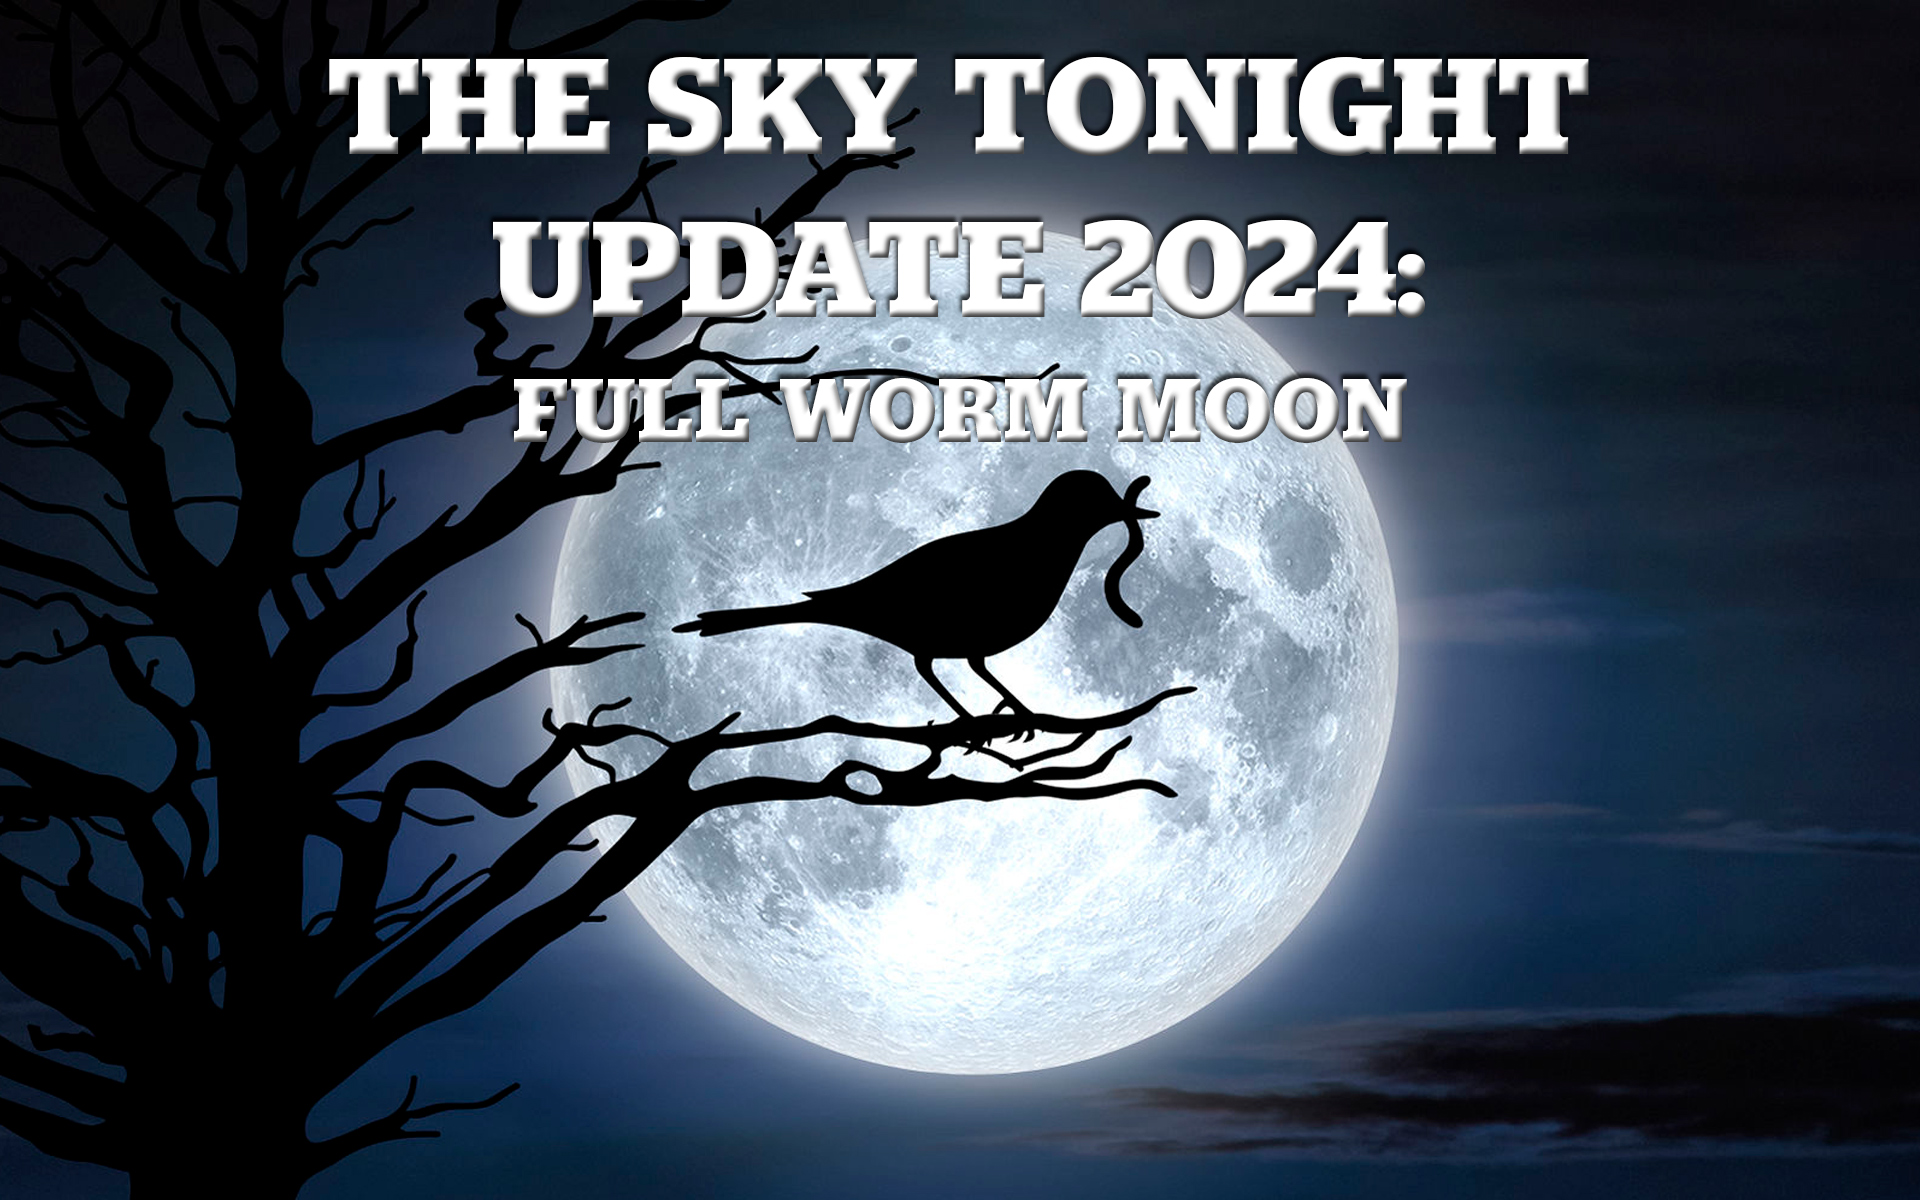 The Sky Tonight Update: Full Worm Moon